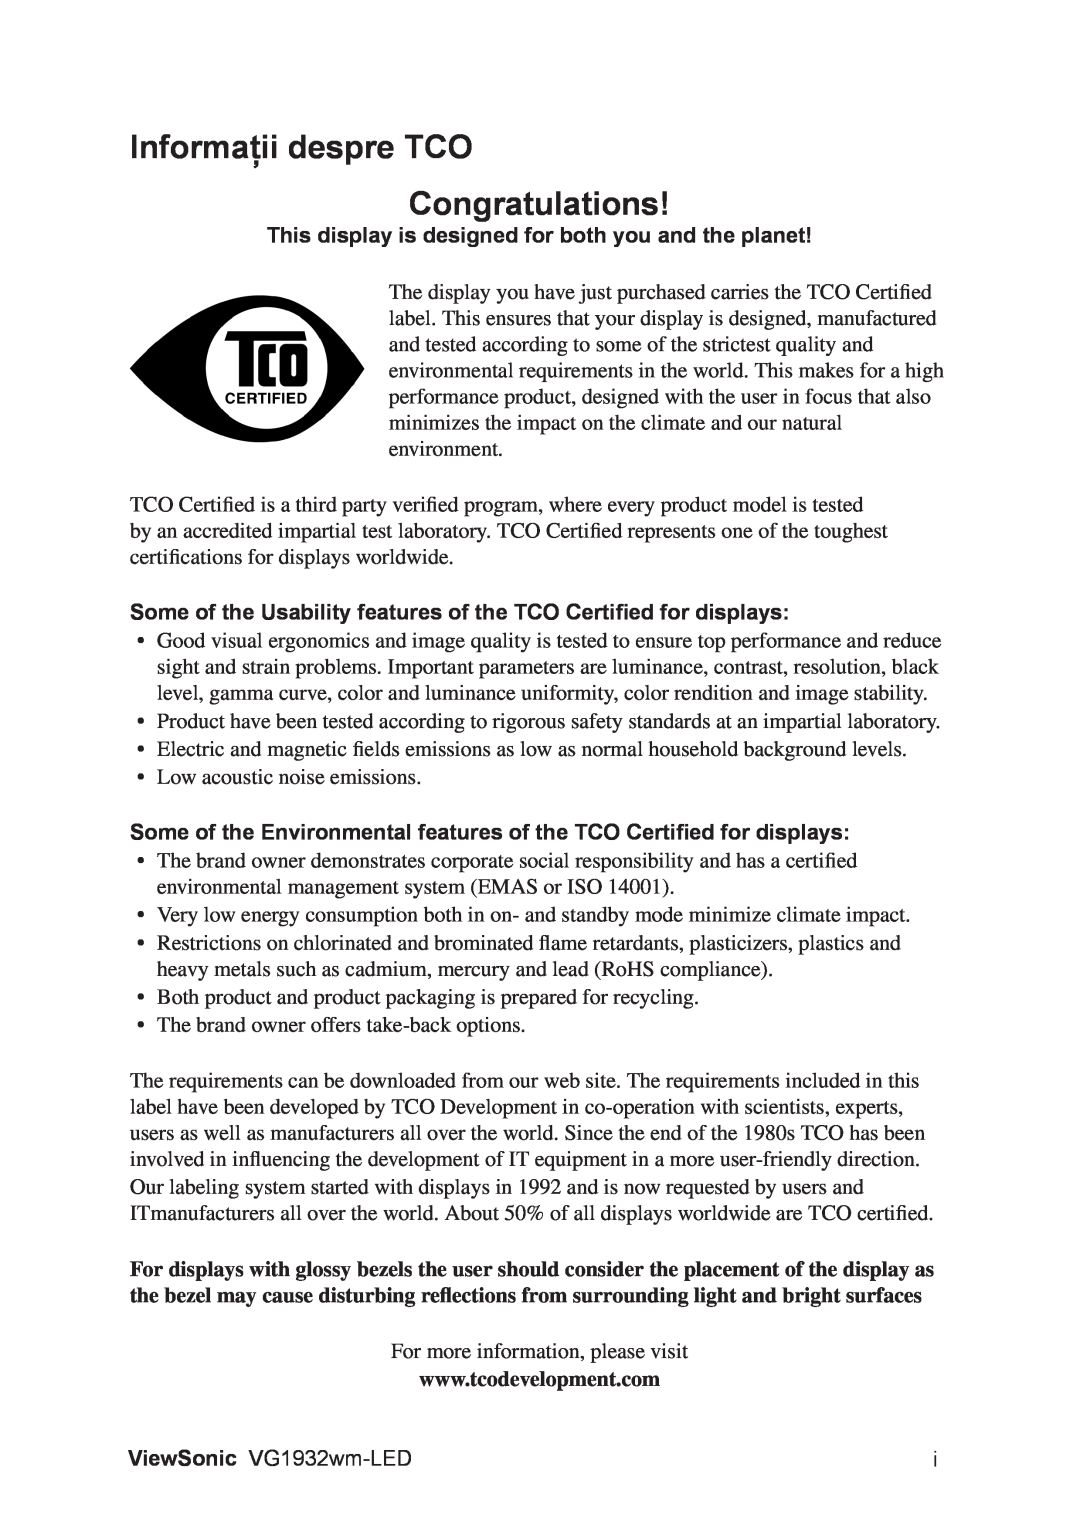 ViewSonic VG1932WM-LED manual Informaţii despre TCO Congratulations 